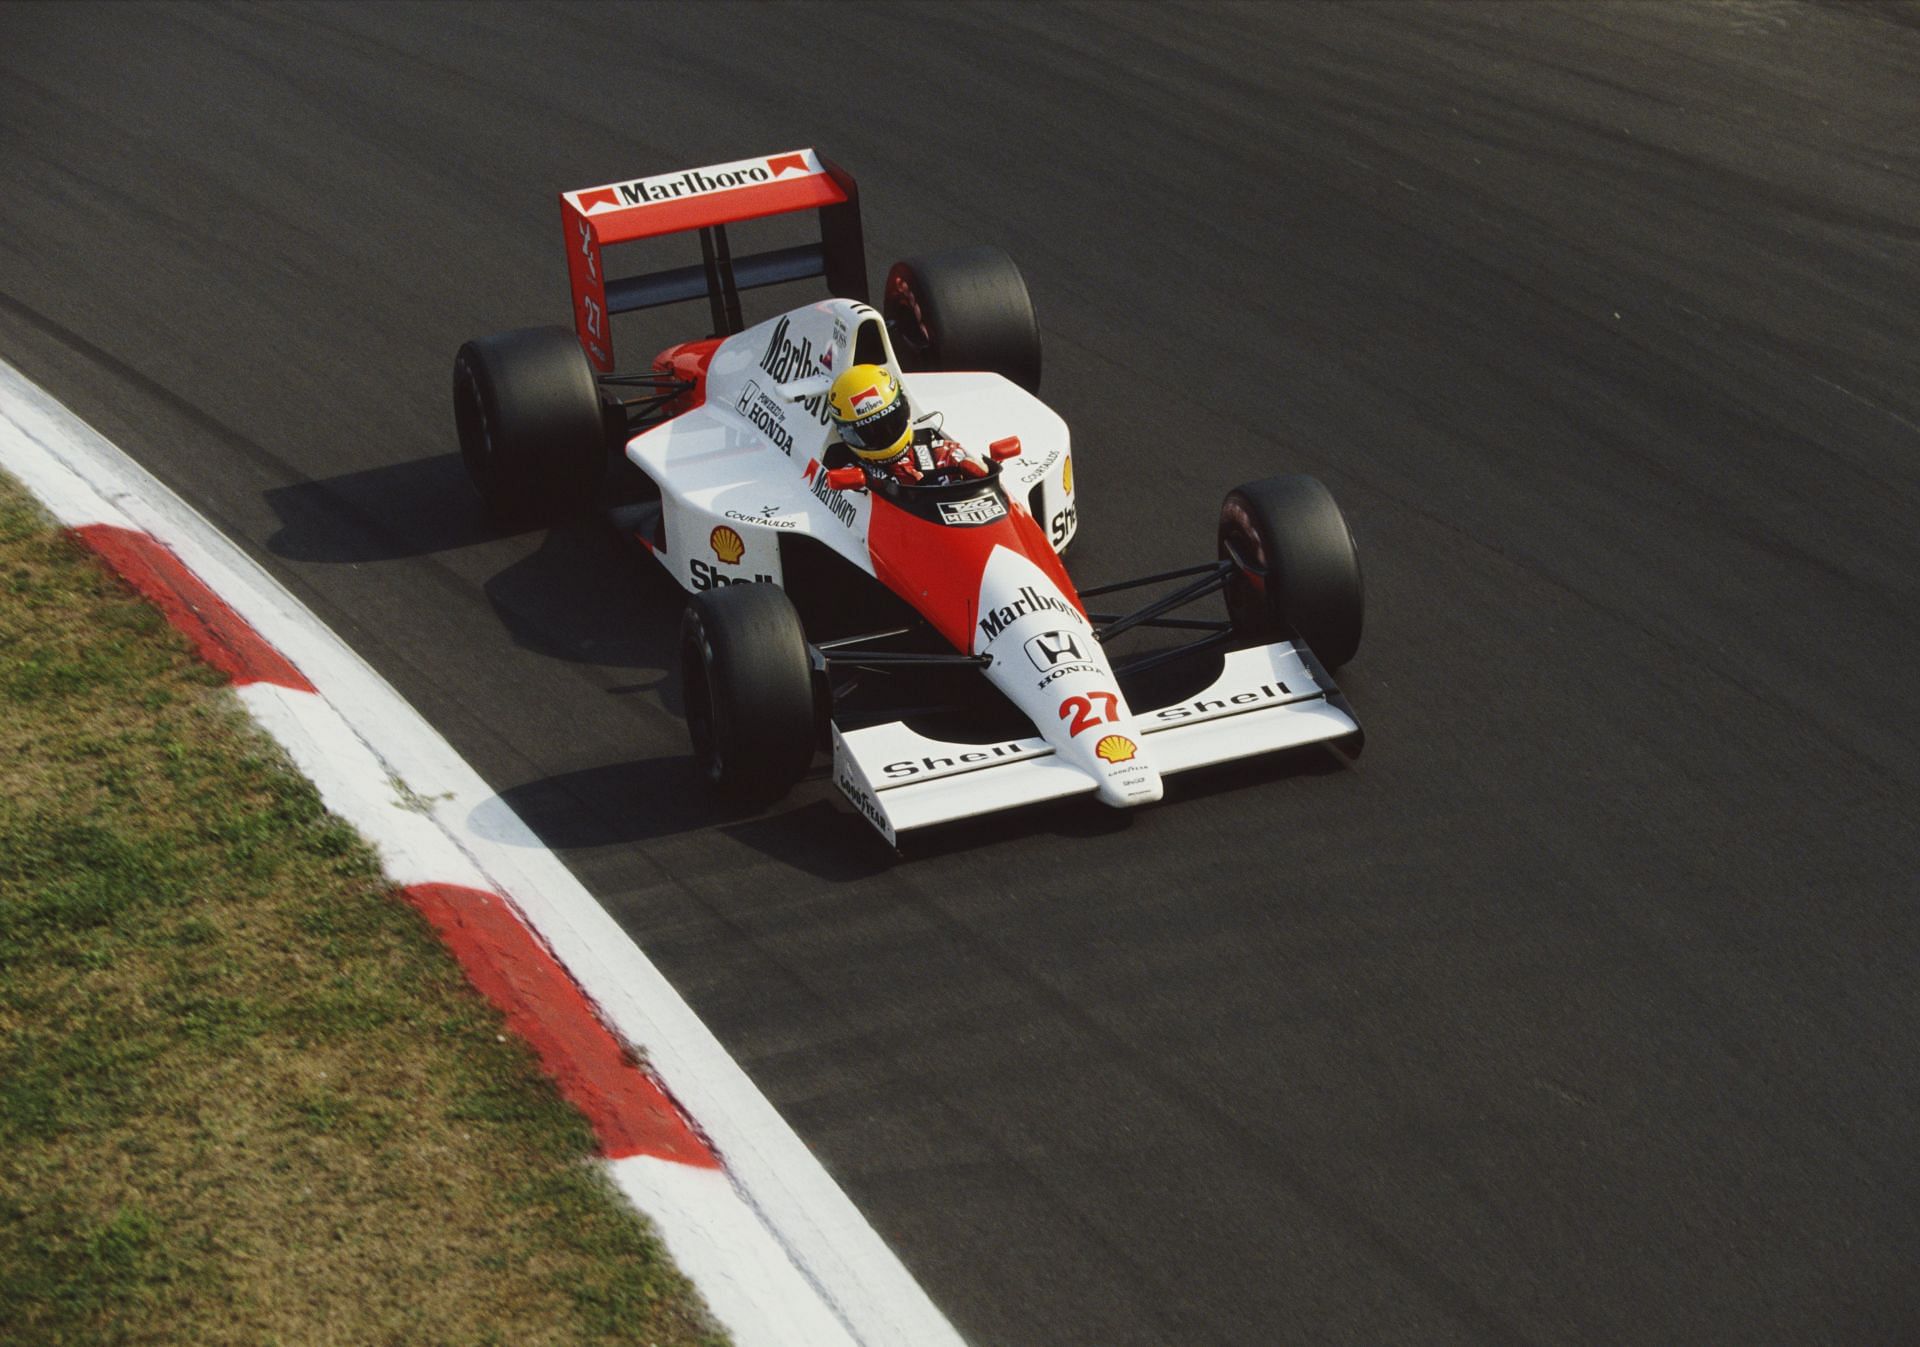 Senna in his championship-winning McLaren MP4/5B in 1990